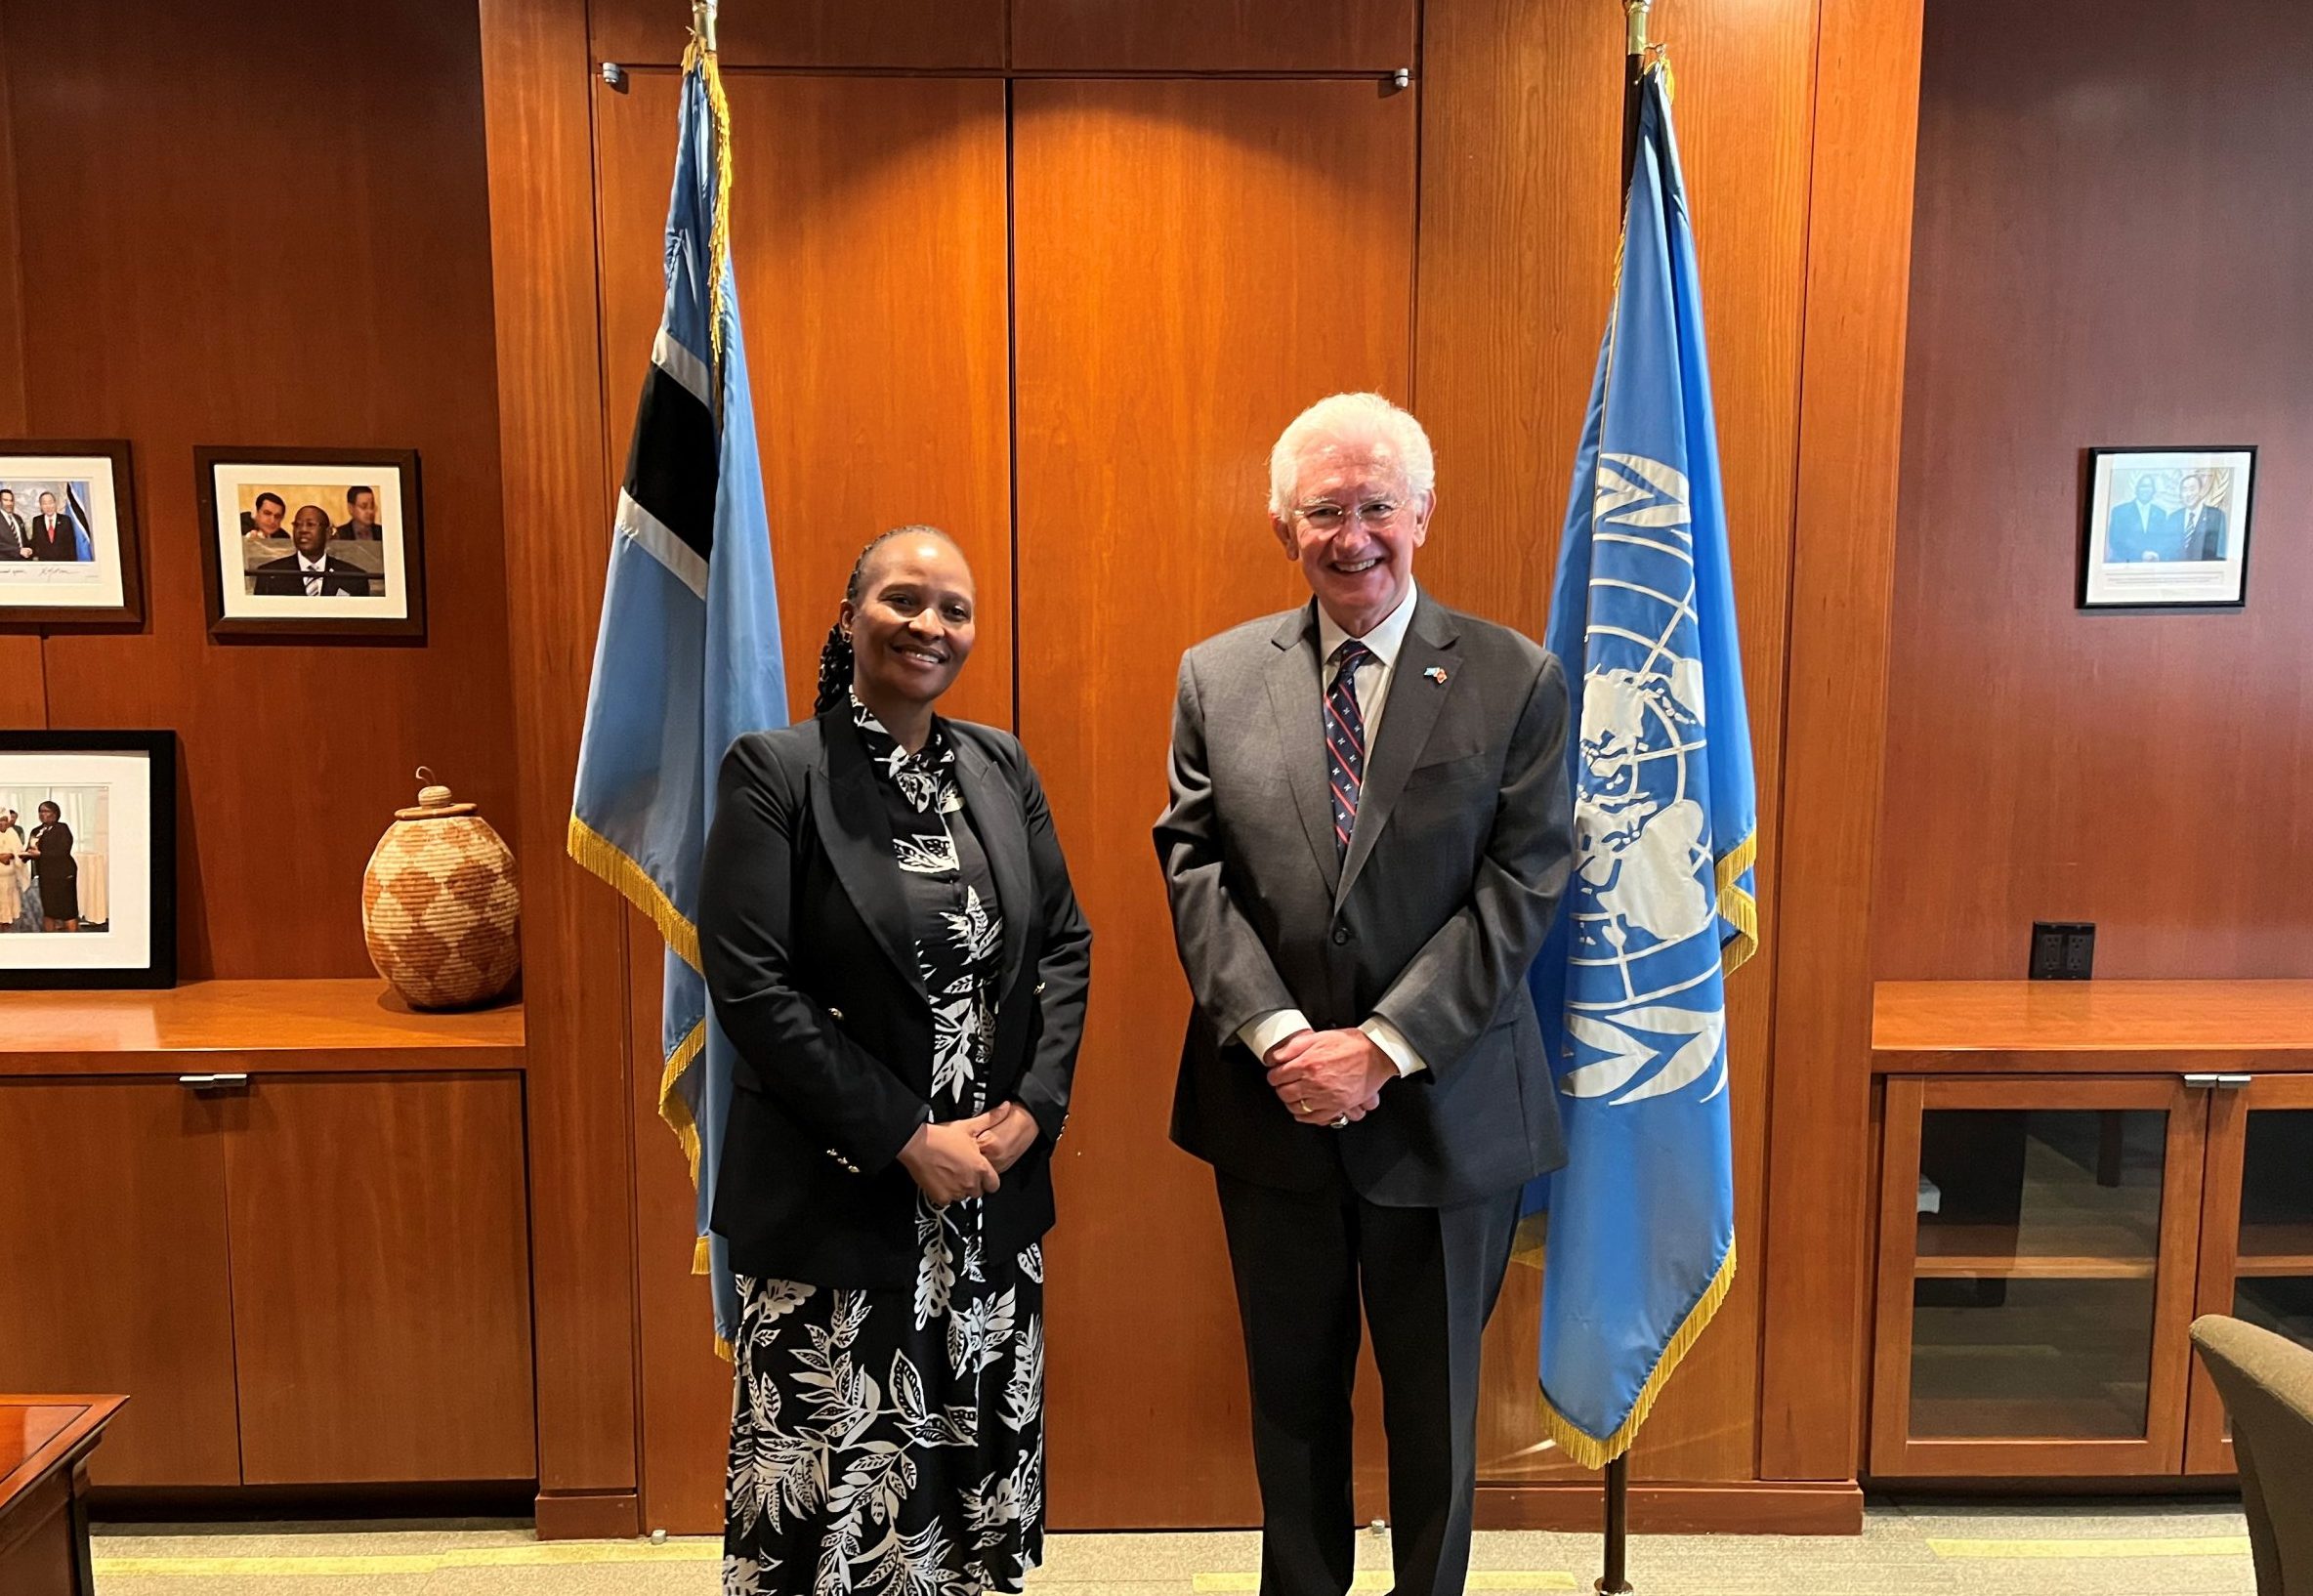 H.E. Ambassador Paul Beresford-Hill met with H.E. Ambassador Gladys Mokhawa, the Permanent Representative of the Republic of Botswana to the United Nations